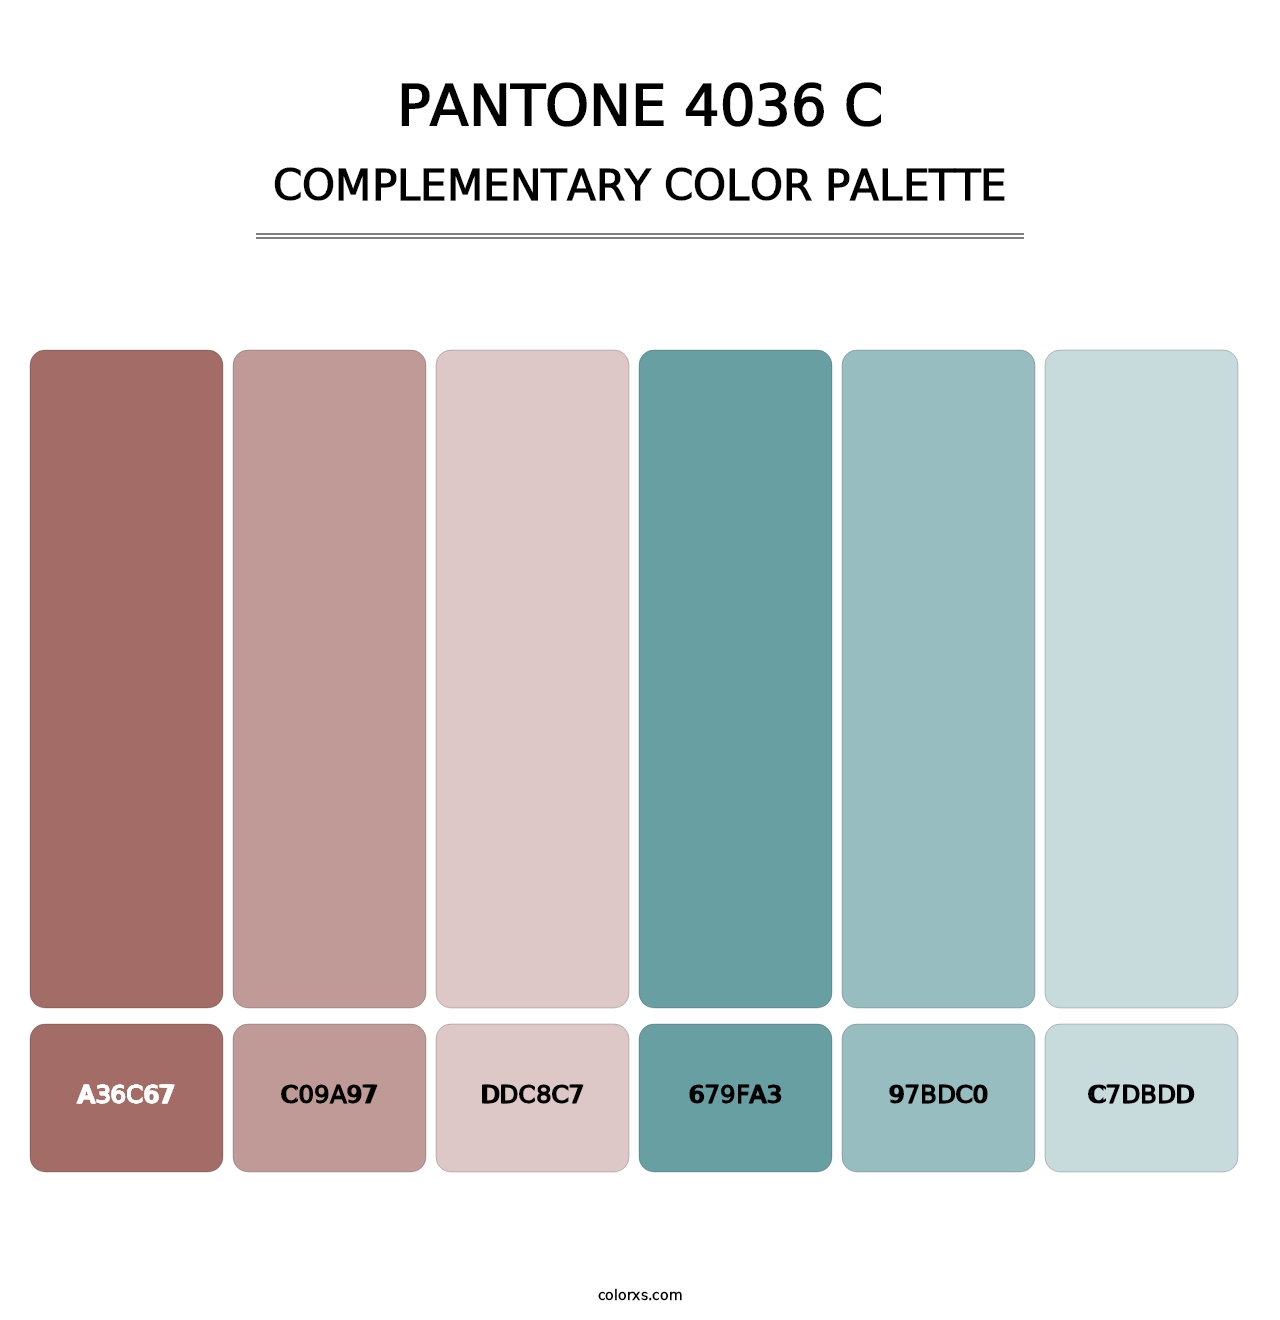 PANTONE 4036 C - Complementary Color Palette